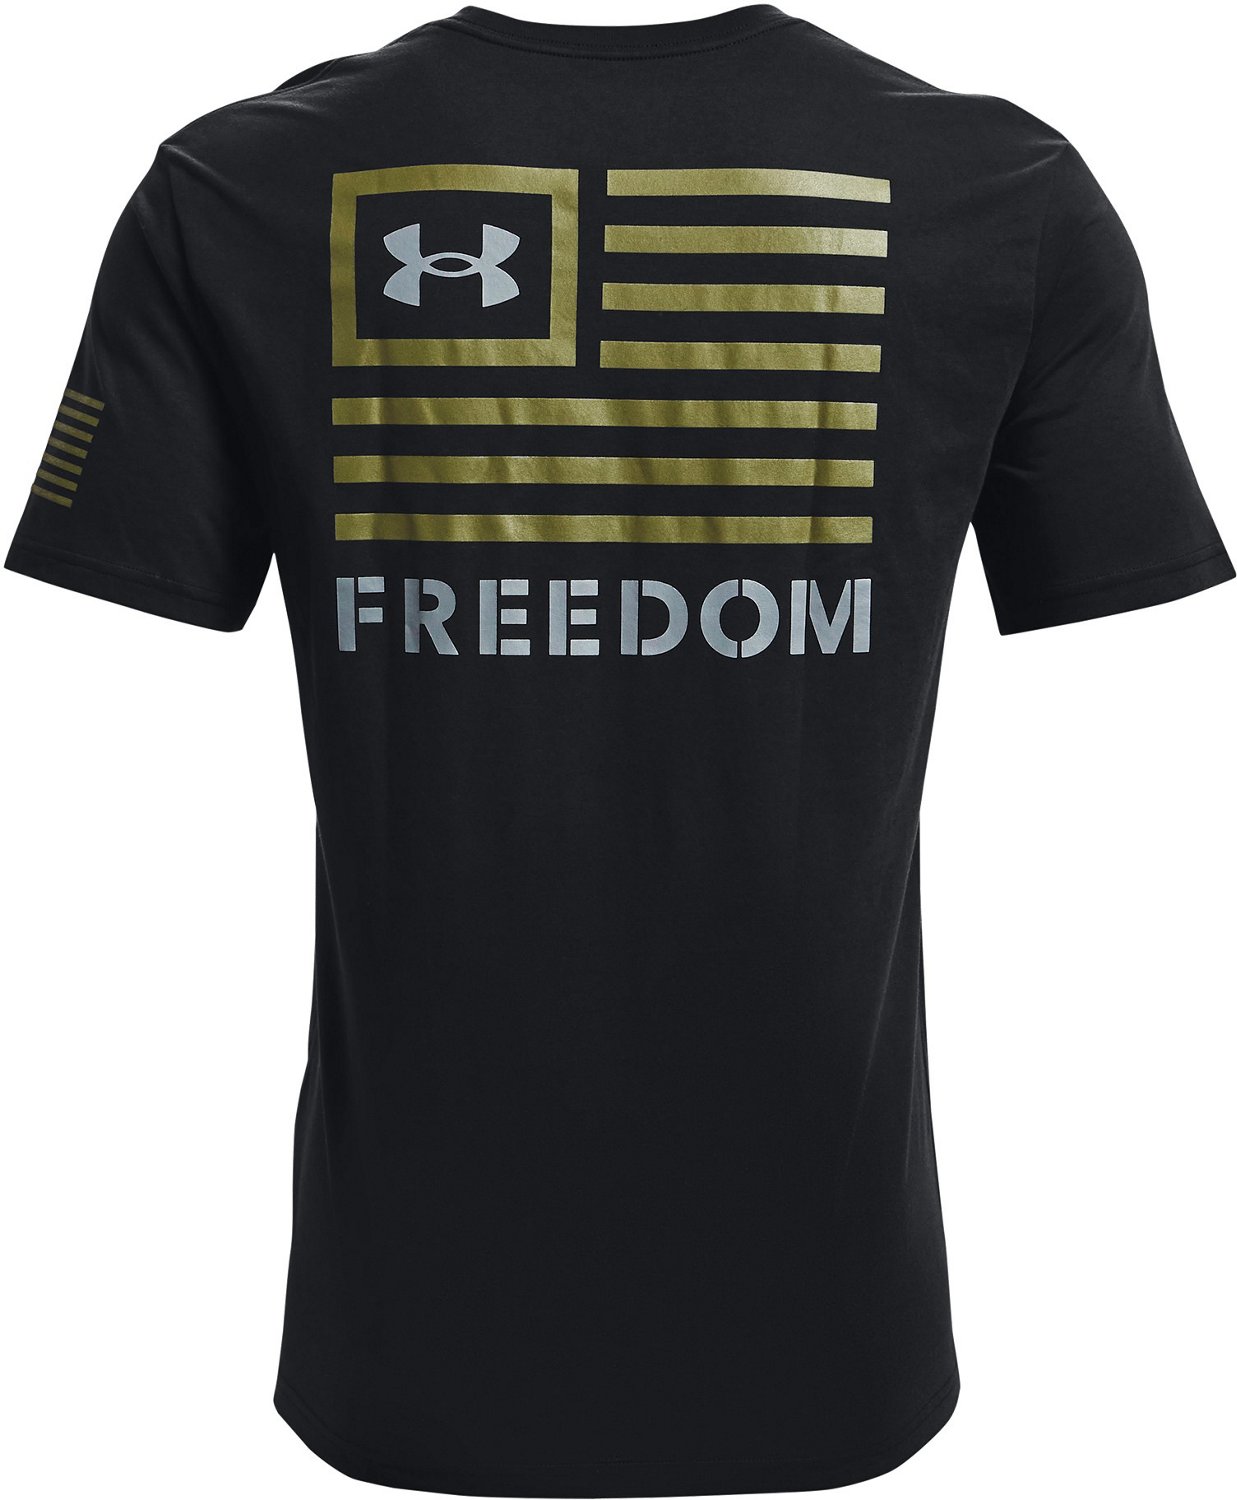 Under Armour Mens Freedom Banner Short Sleeve T-shirt